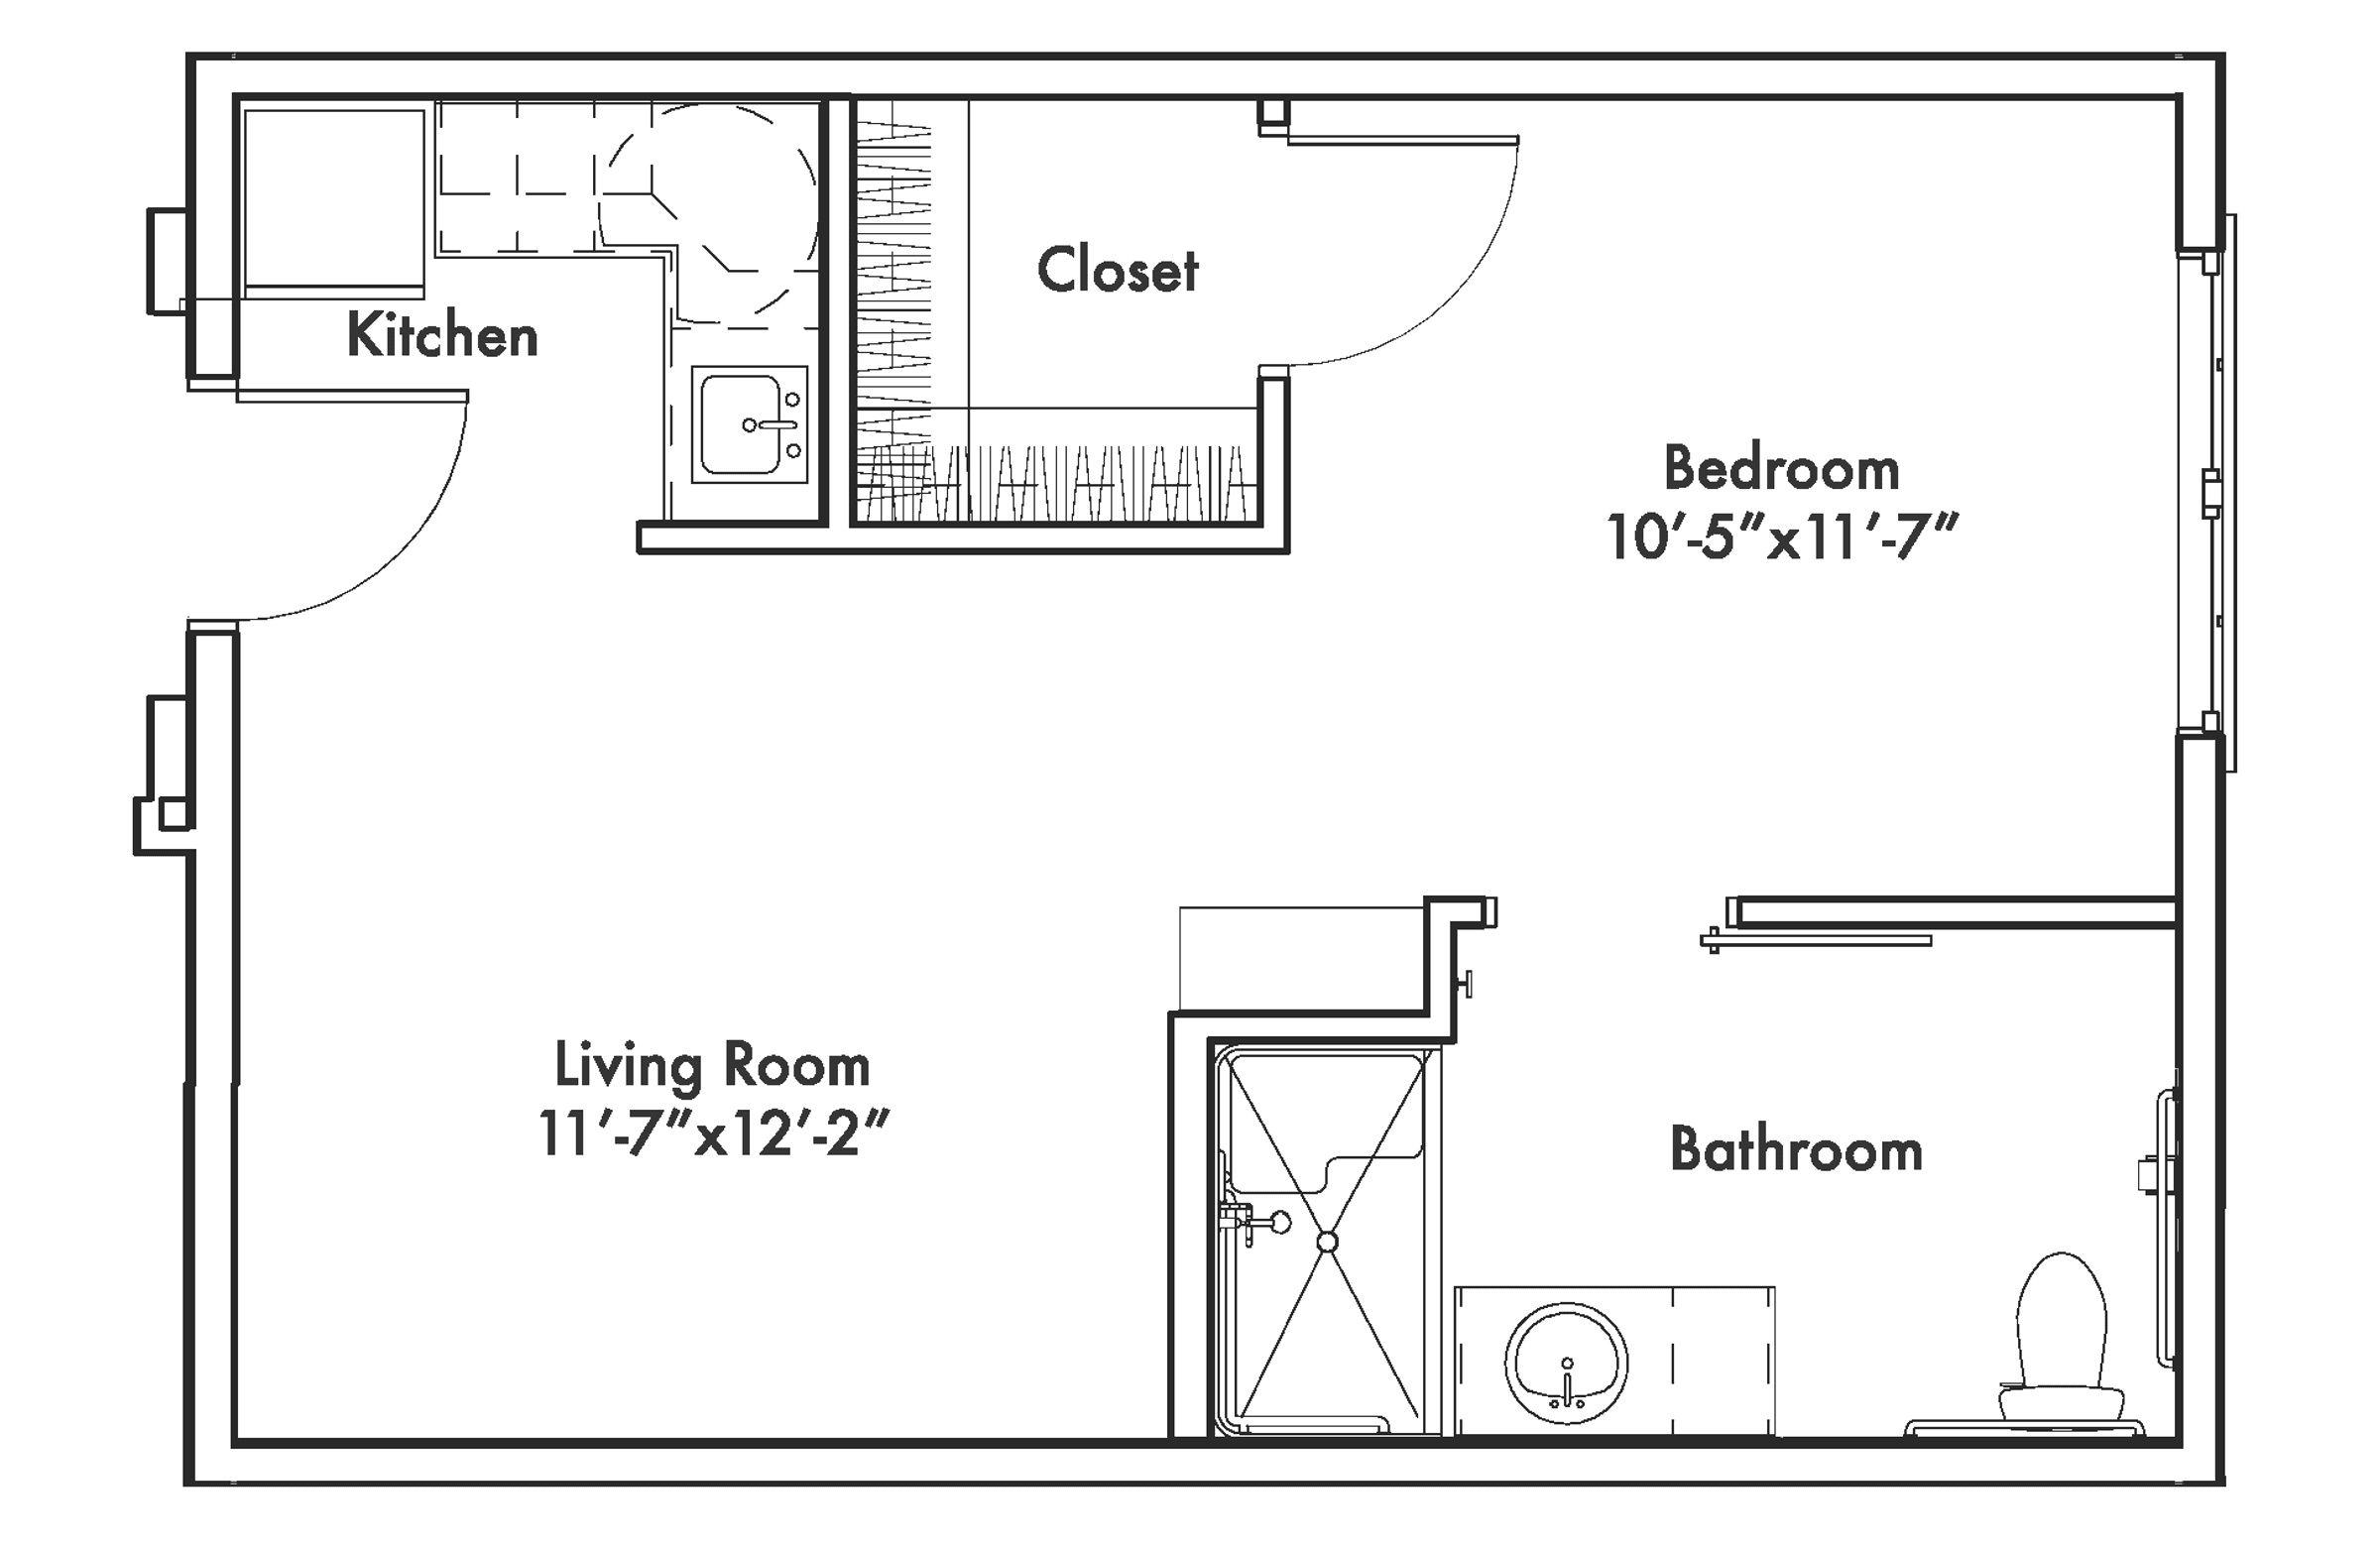 The Claiborne at Gulfport Highlands senior living community one-bedroom floor plan